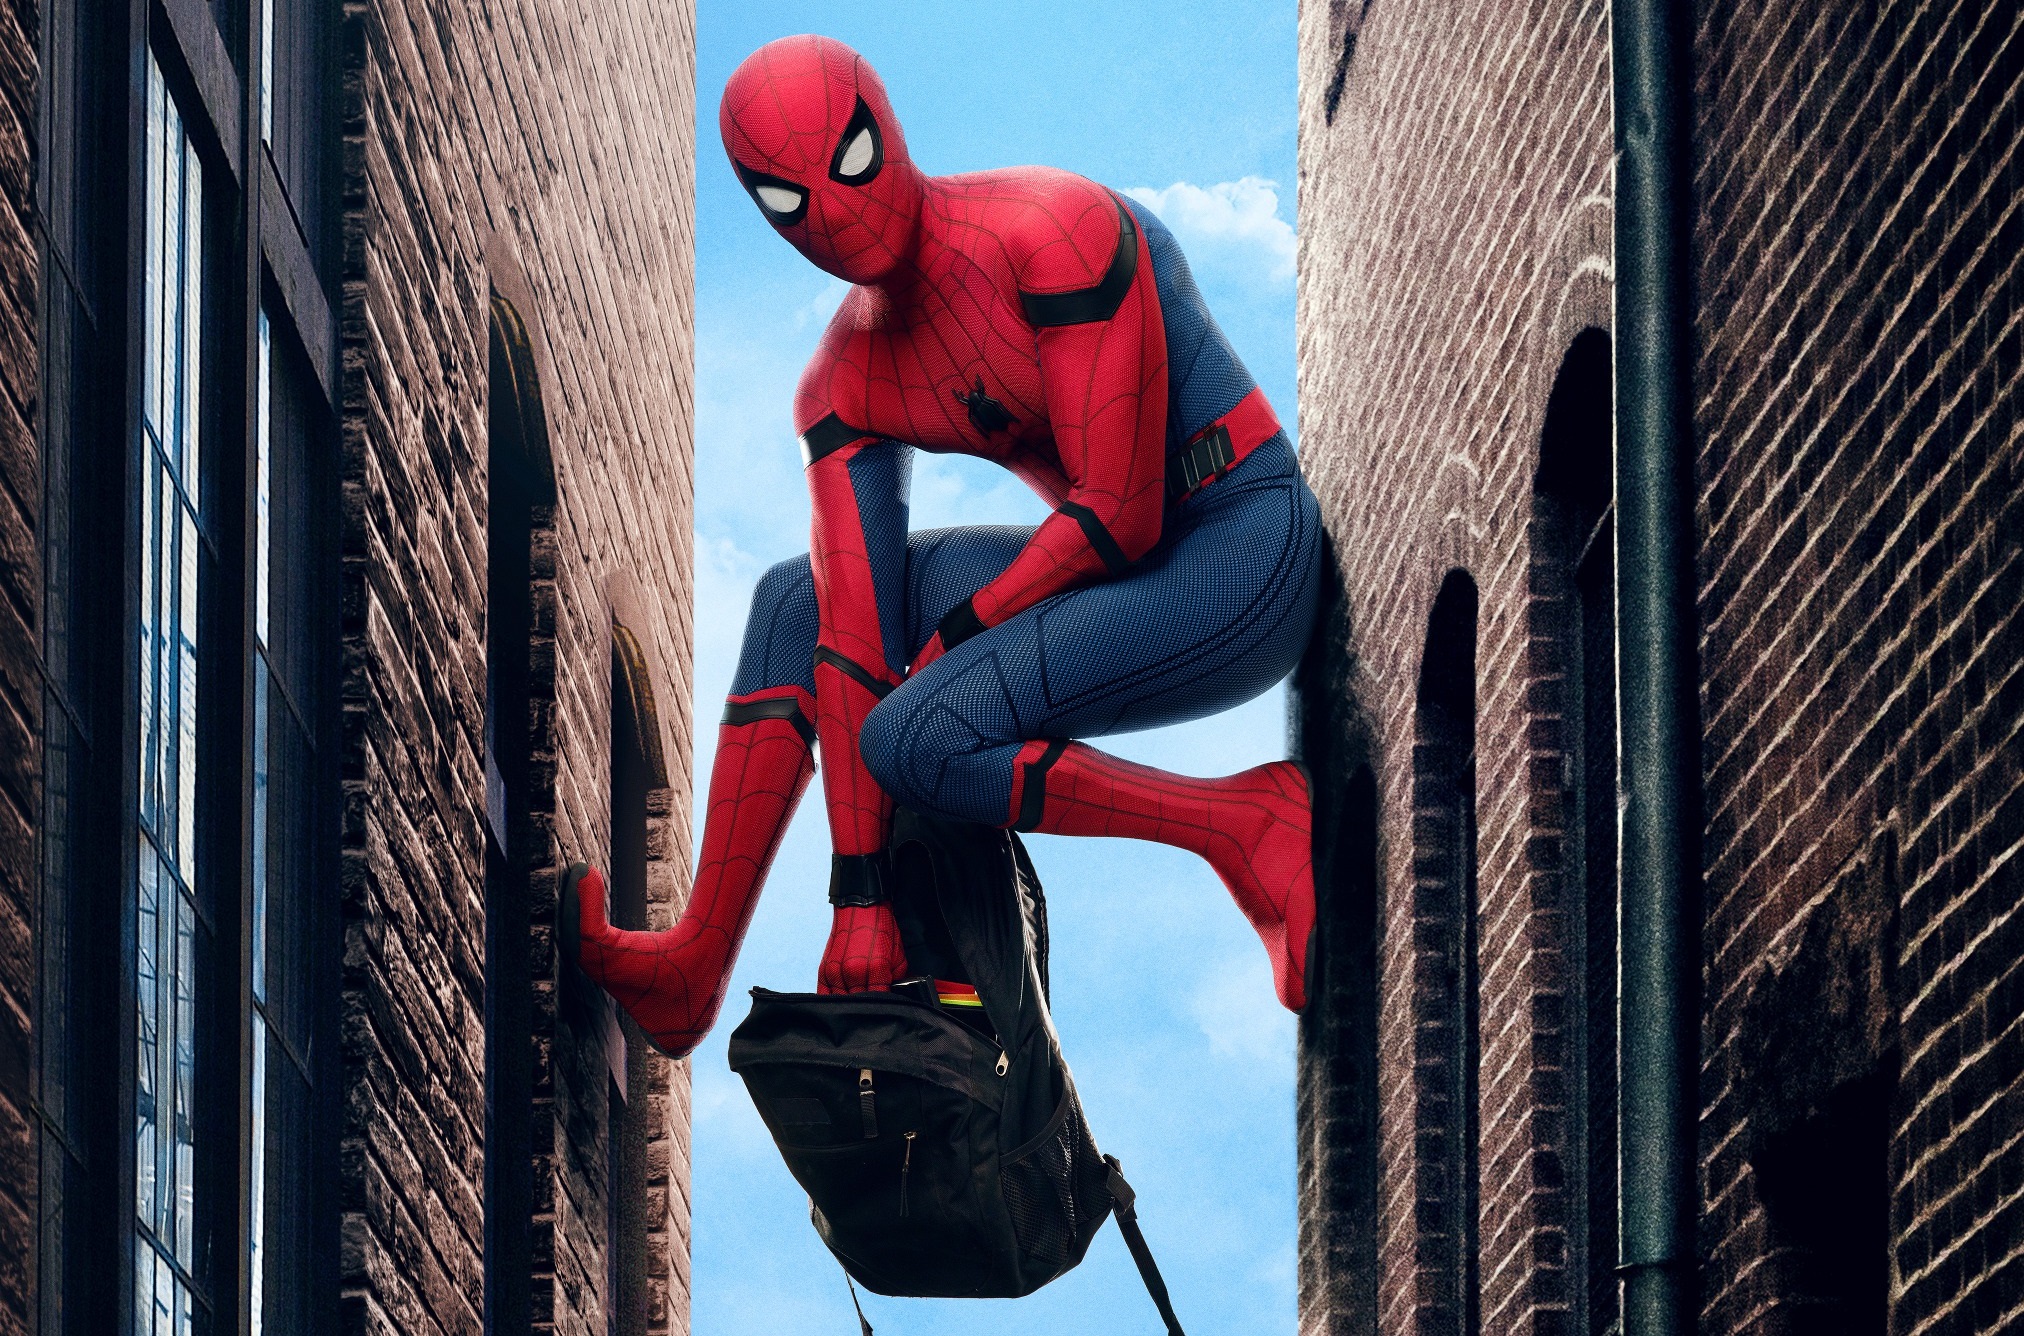 Spider-Man: Homecoming Art